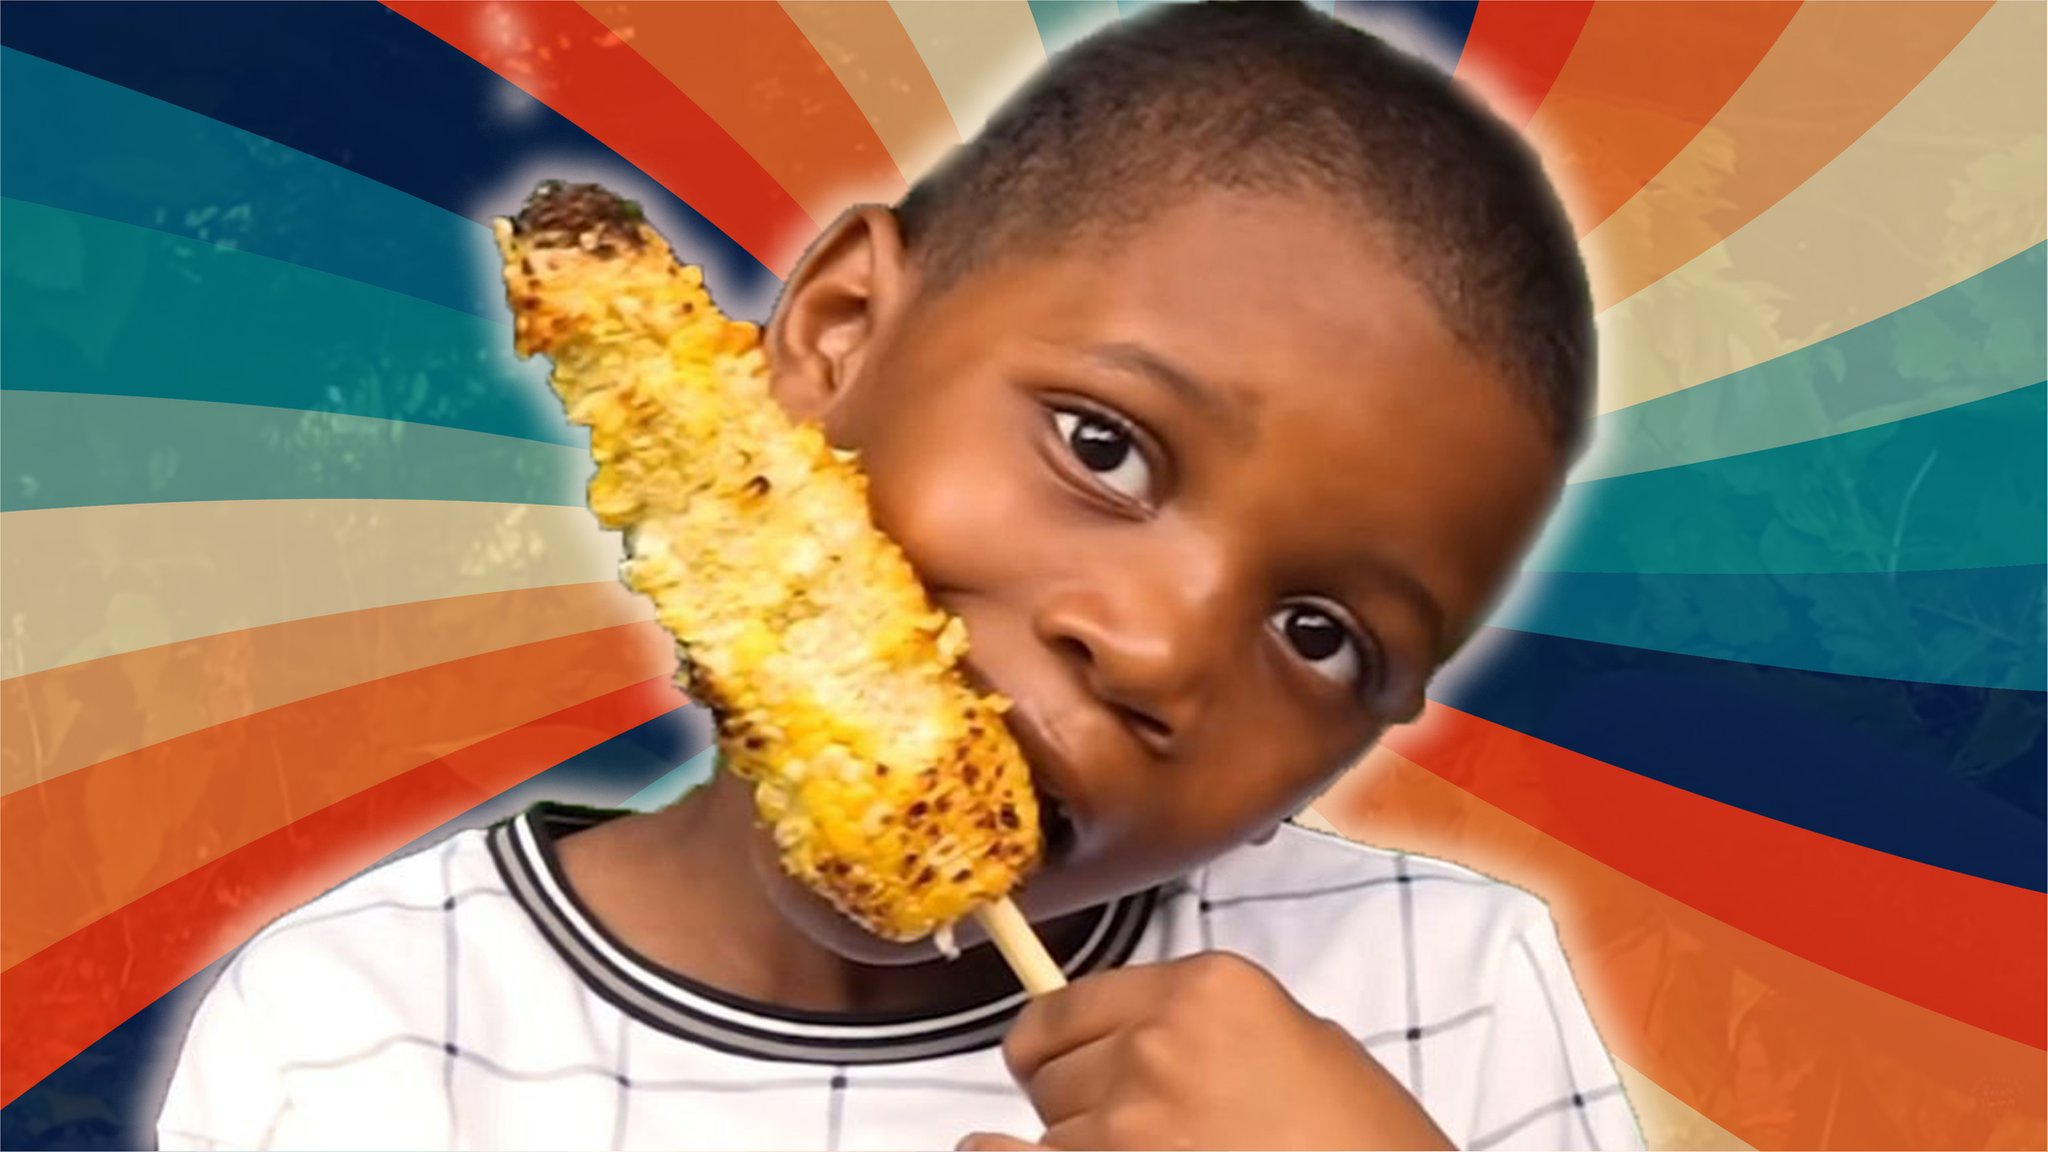 Corn песни. Its Corn. Phild Corn meme. Corn Kids 64. Corn Kids 64 game.